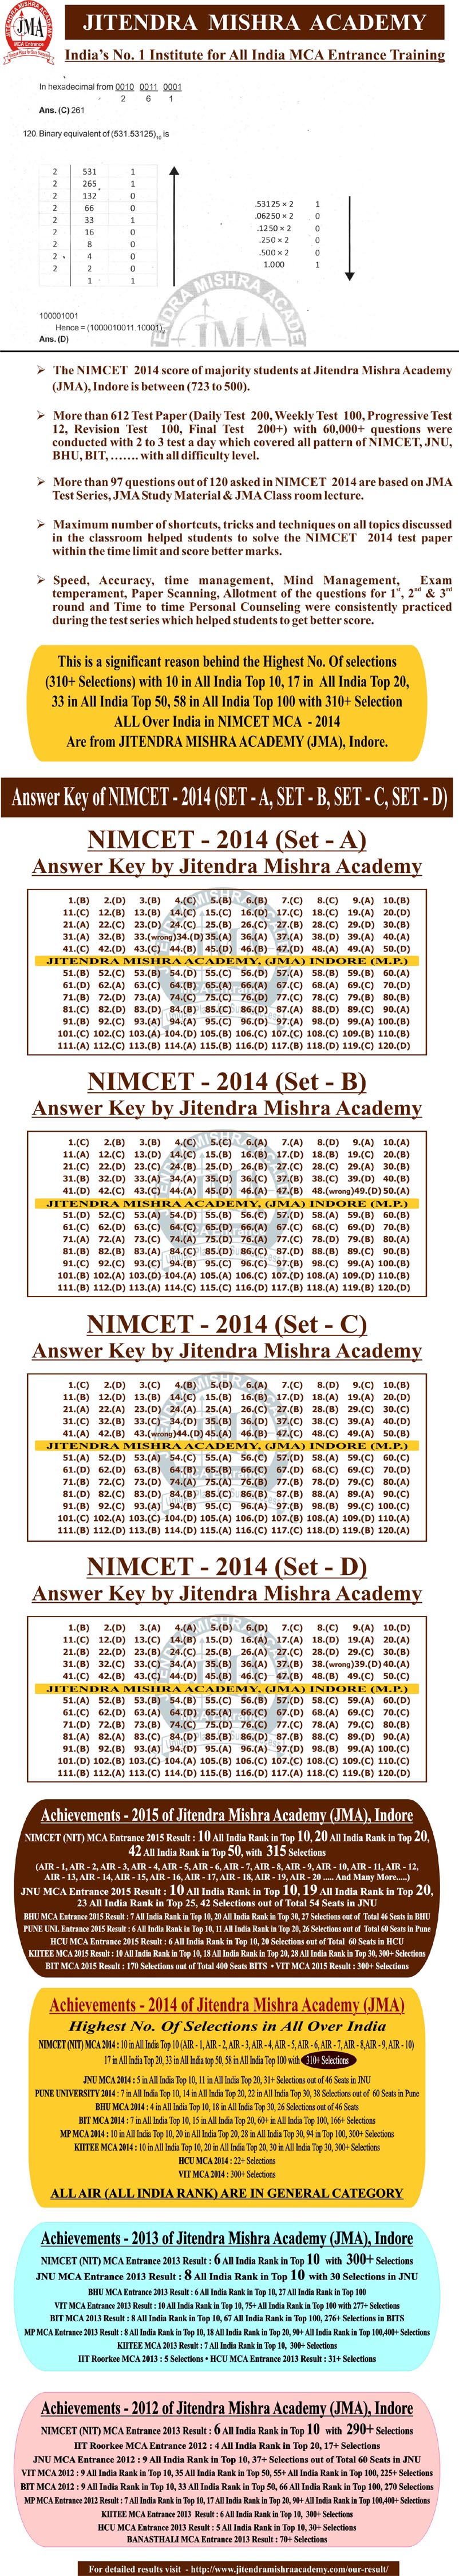 NIMCET - 2014 (SOLUTION) FinalLast page